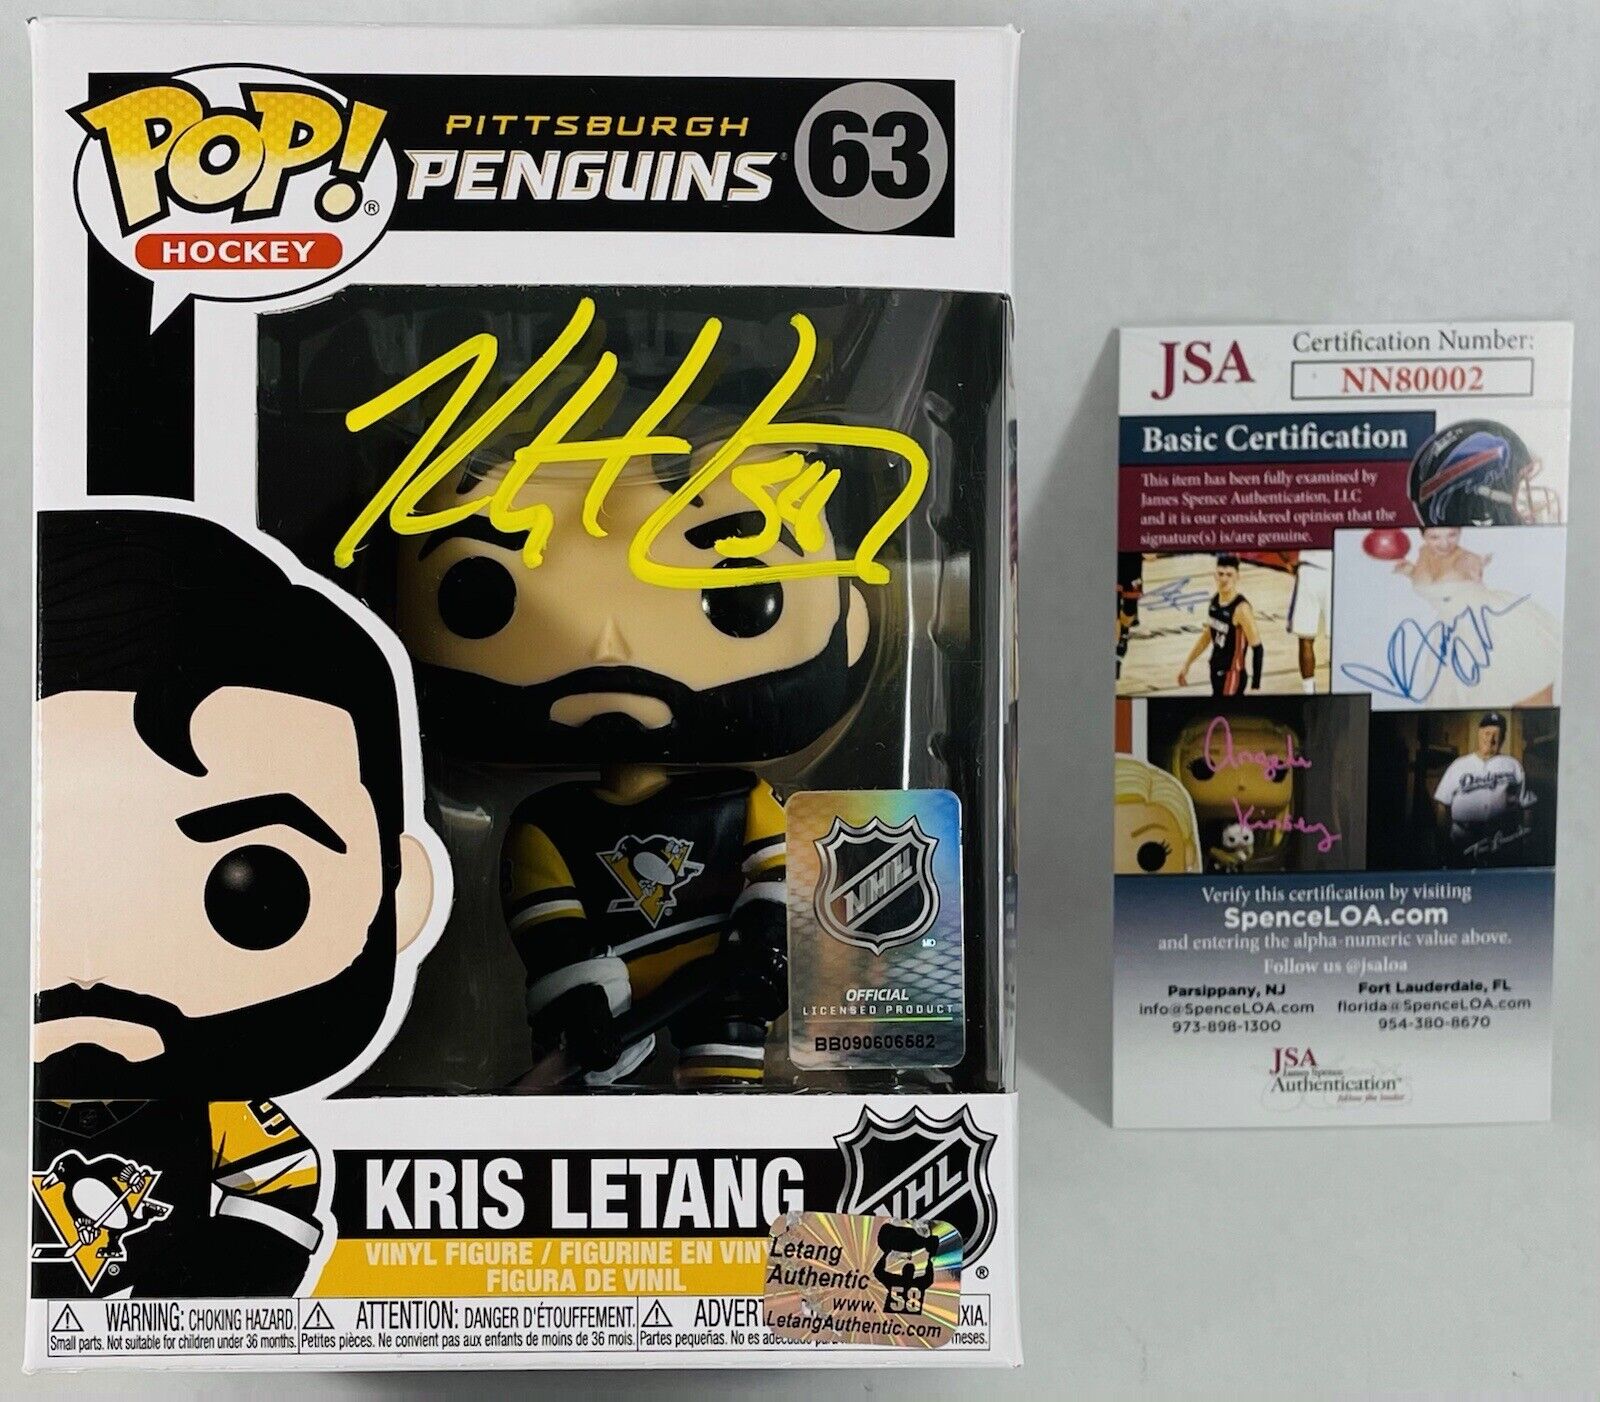 Kris Letang Signed Pittsburgh Penguins Funko Pop Vinyl Figure 63 NHL Hockey JSA